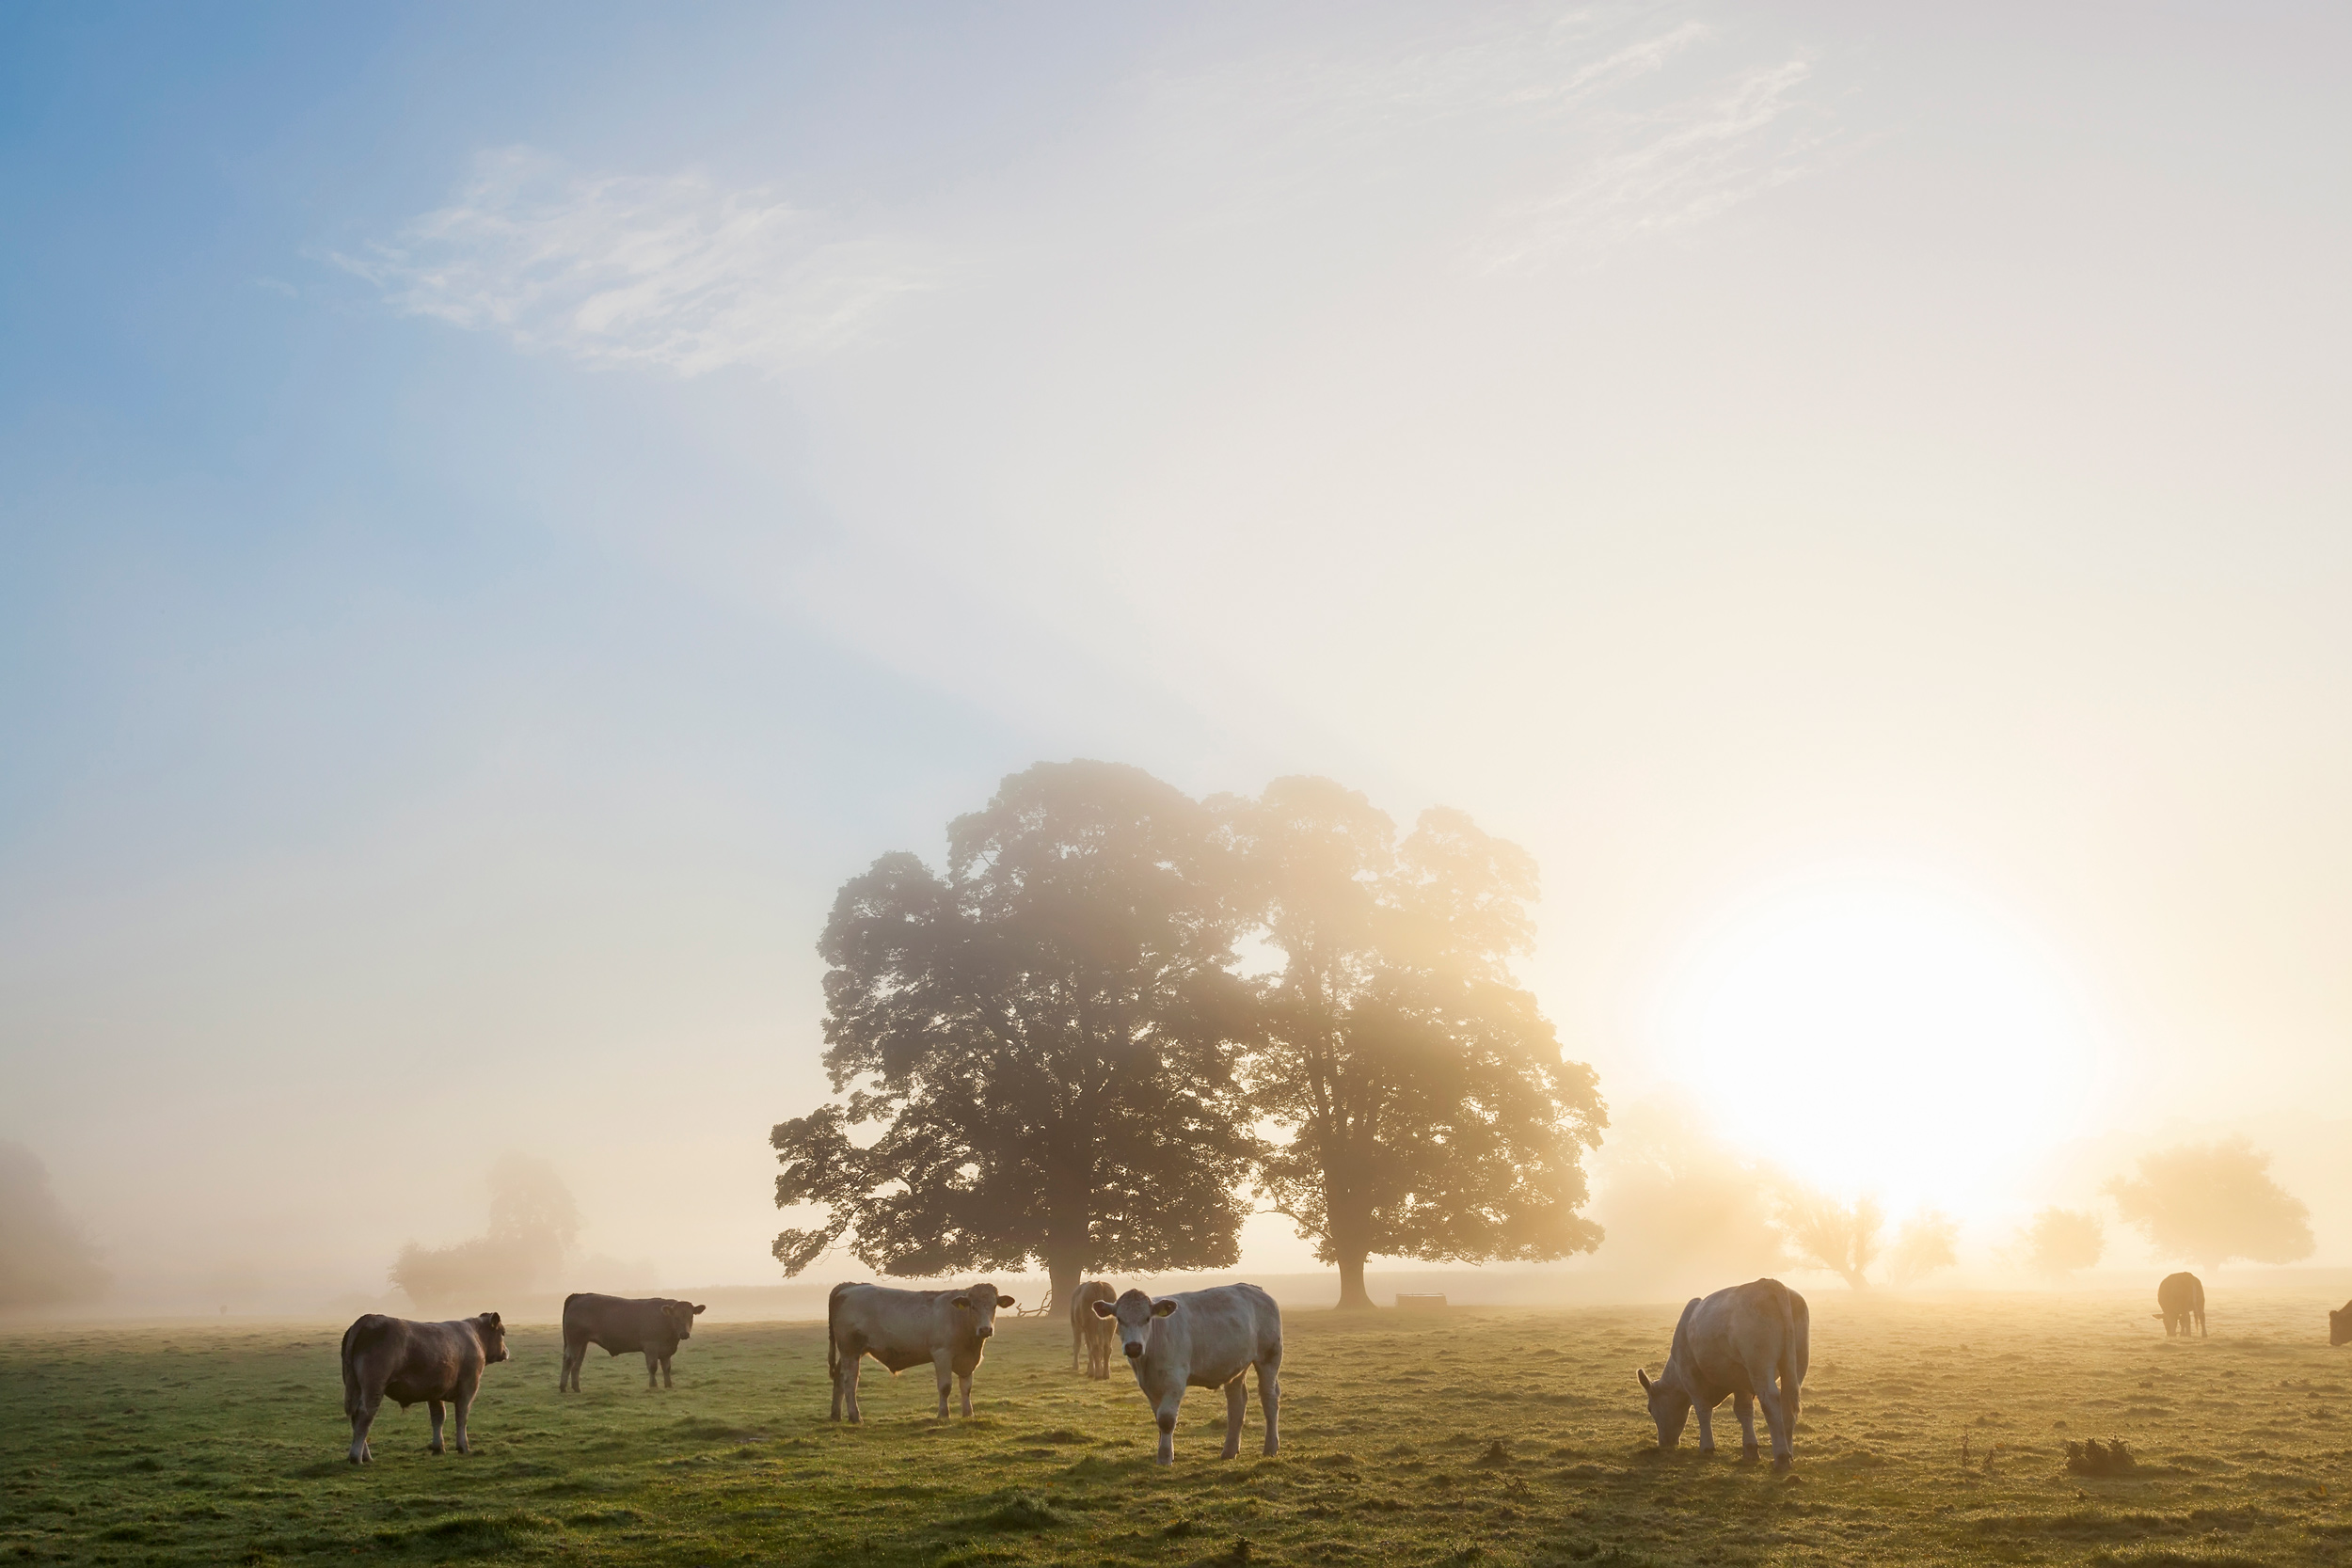 Cows on a misty morning near a tree